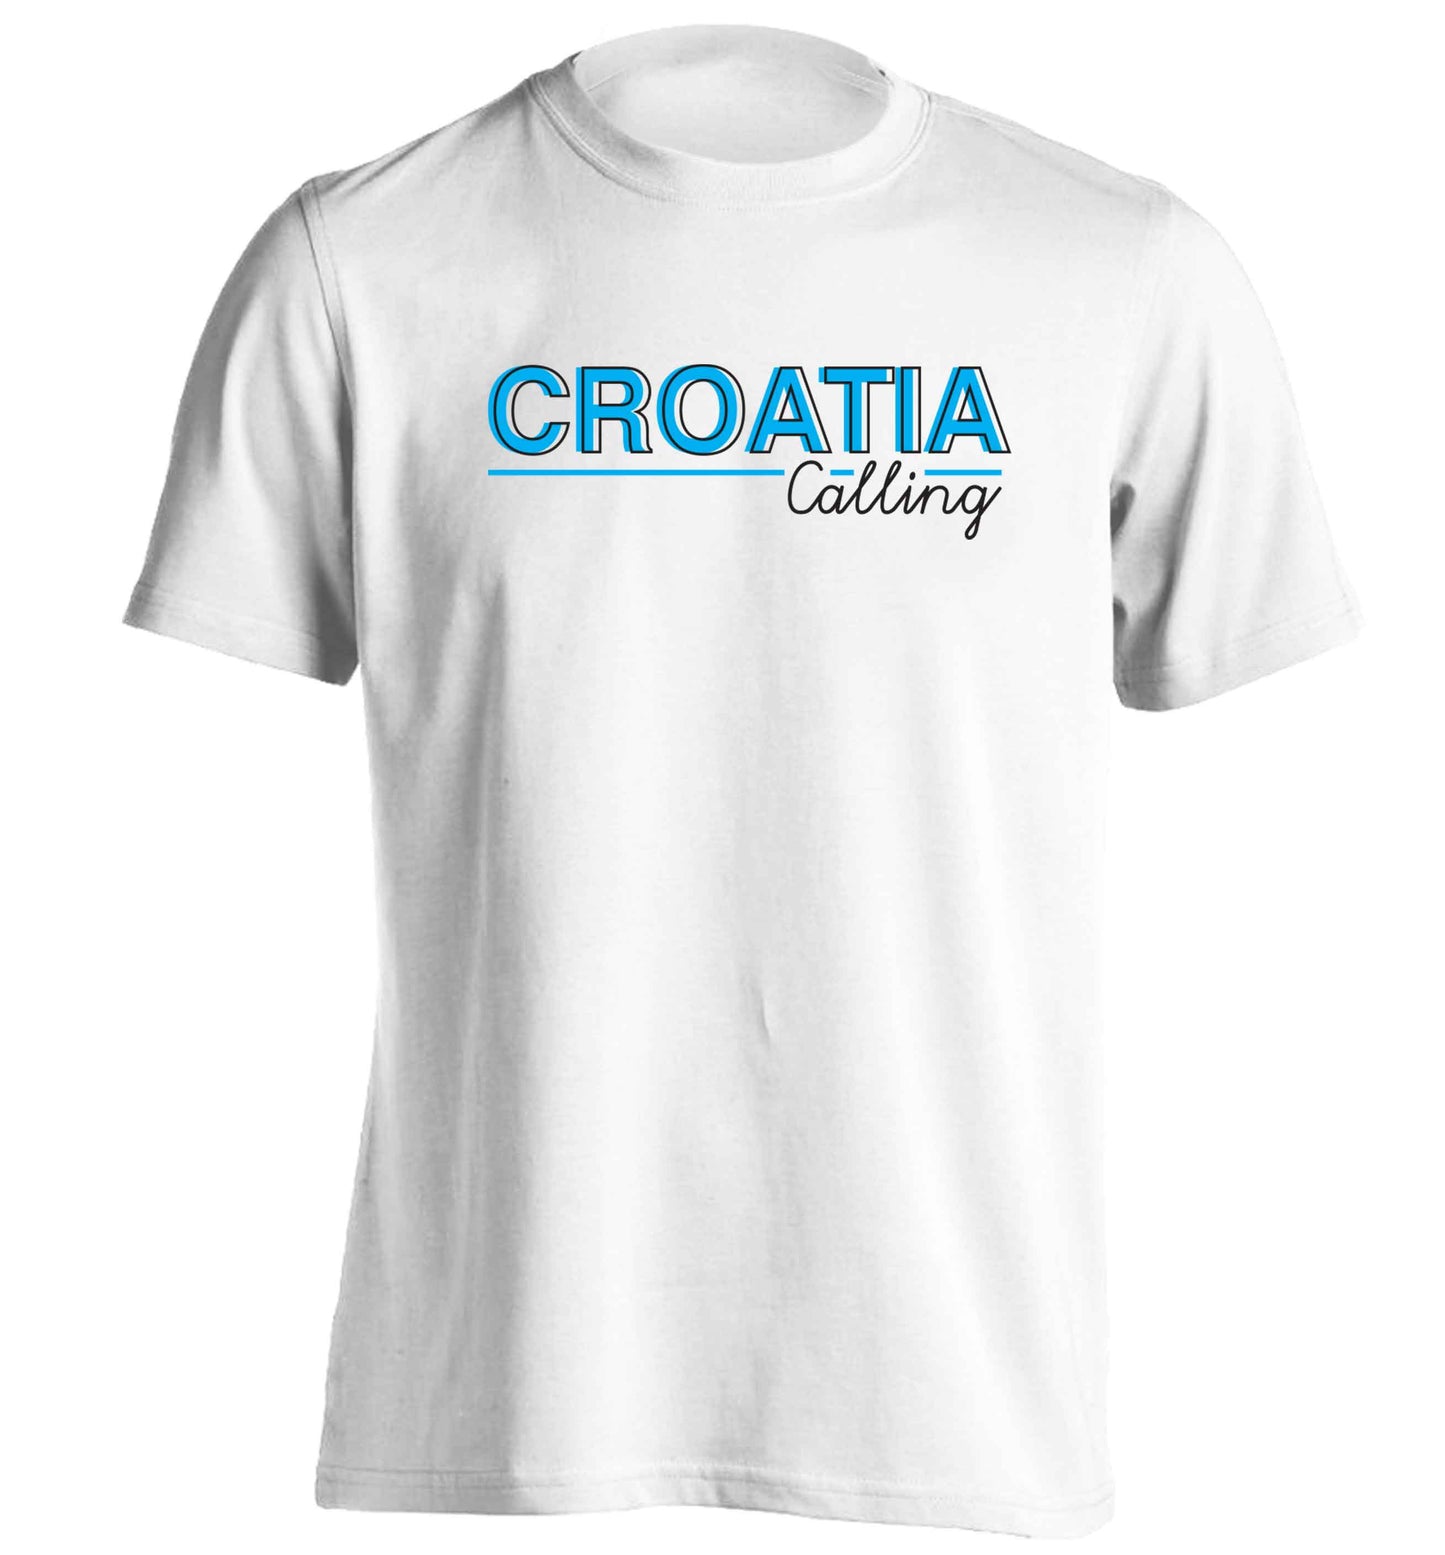 Croatia calling adults unisex white Tshirt 2XL